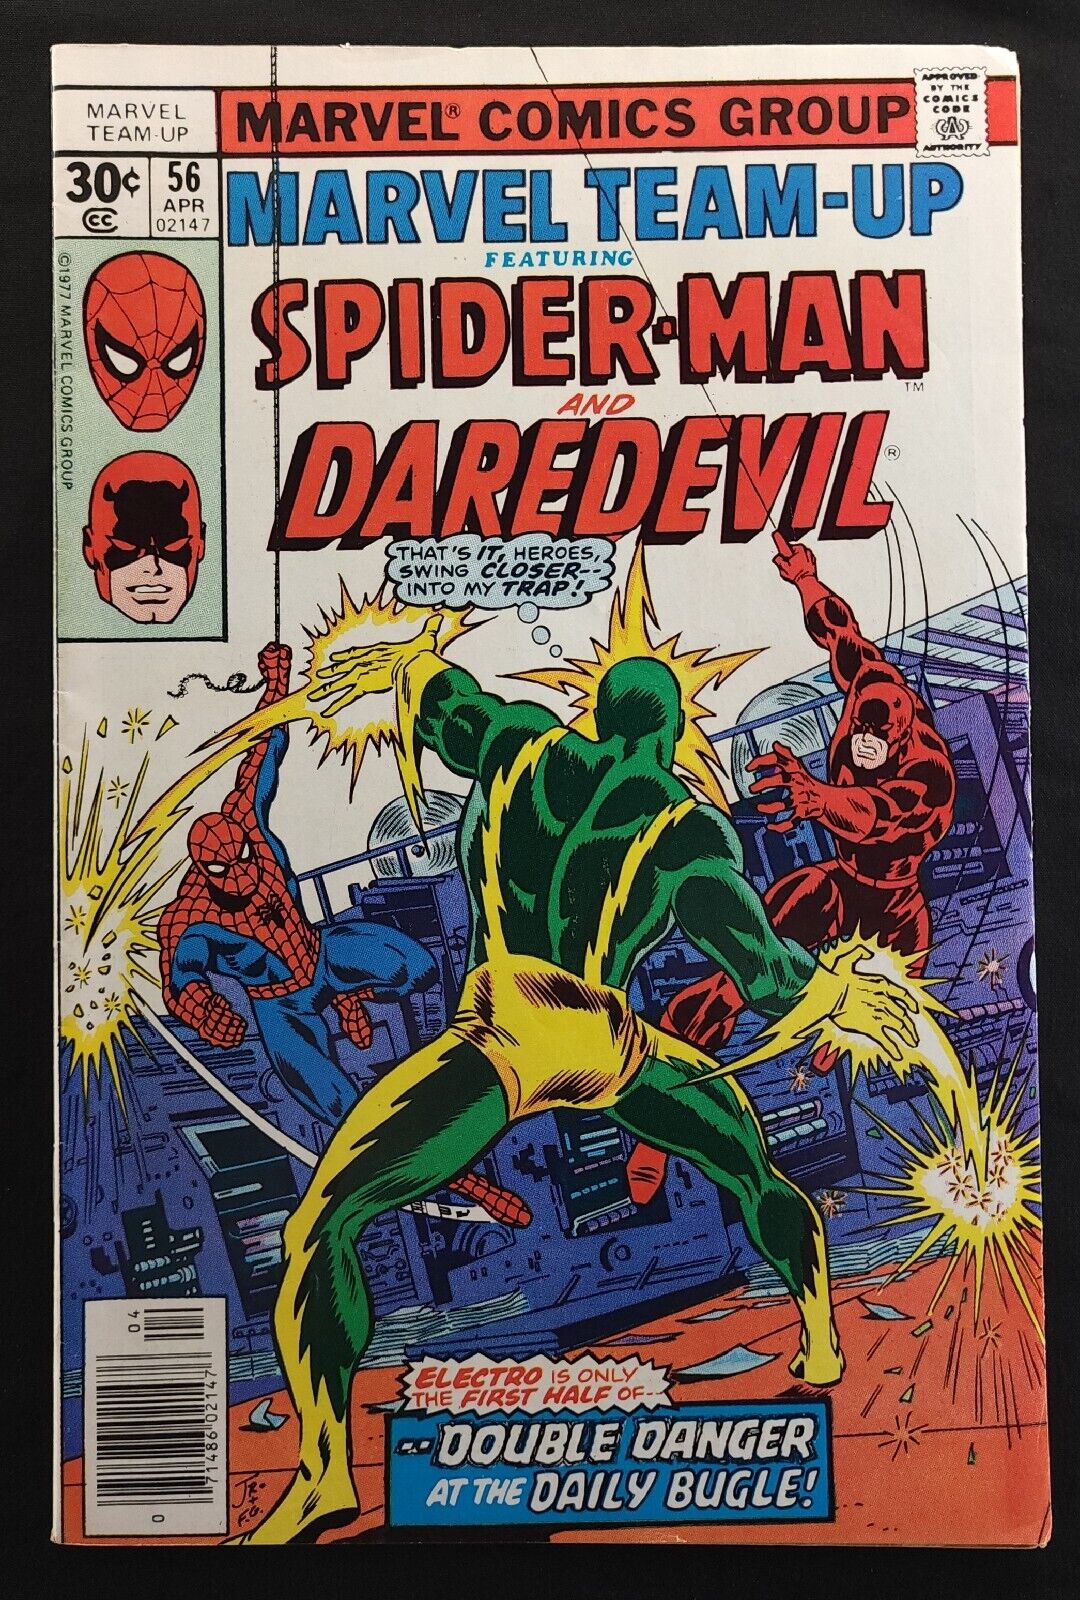 Marvel Team Up #56 (Marvel, Apr 1977)